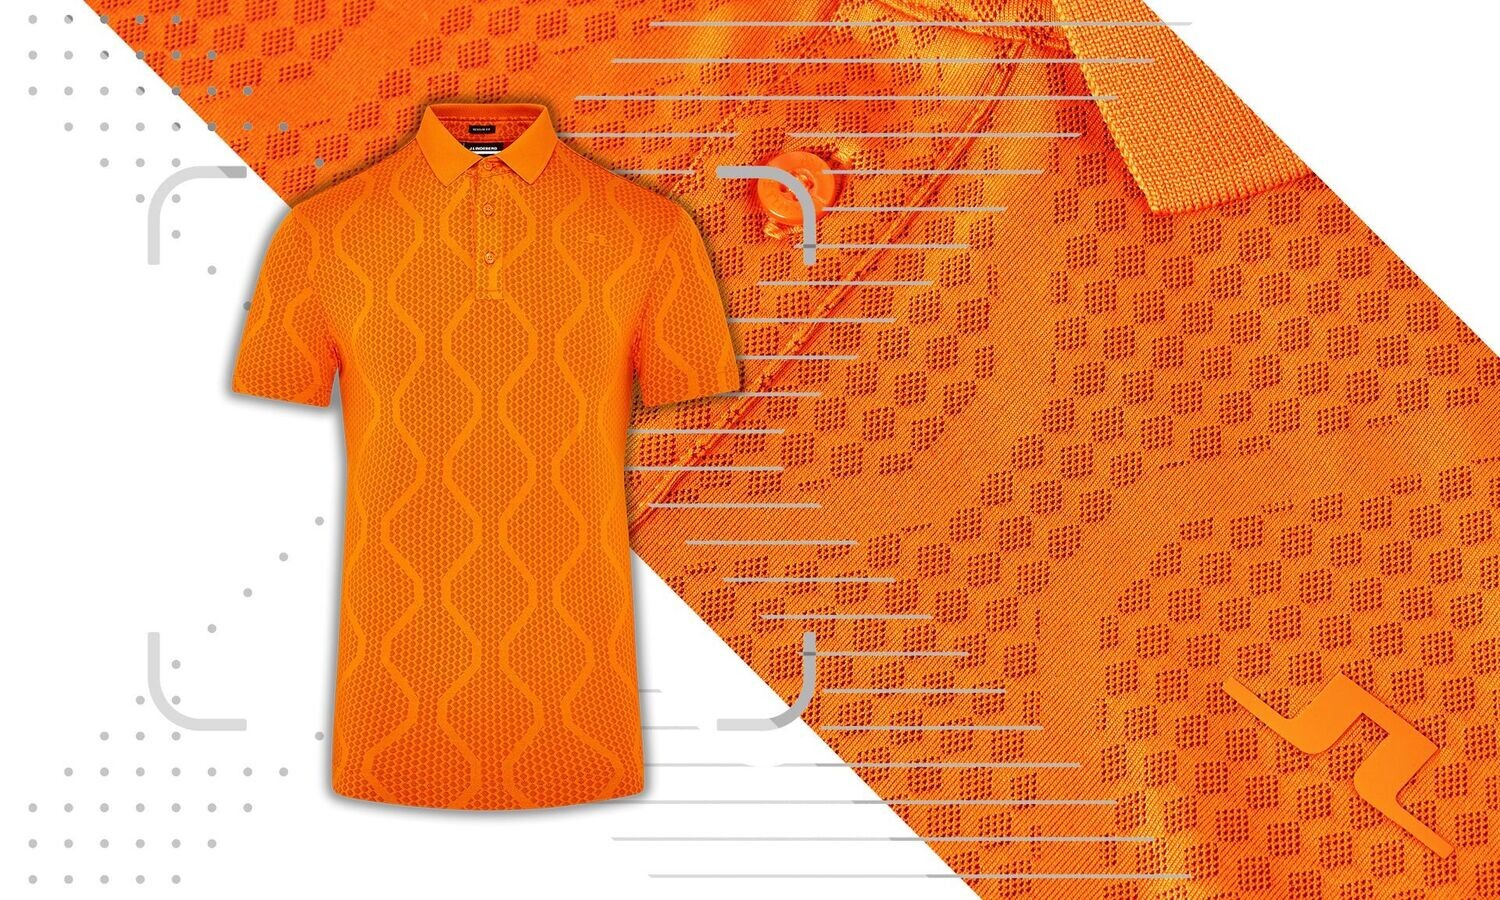 J Lindeberg Mat Jacquard Golf Polo Shirt - Russet Orange, Size: Small